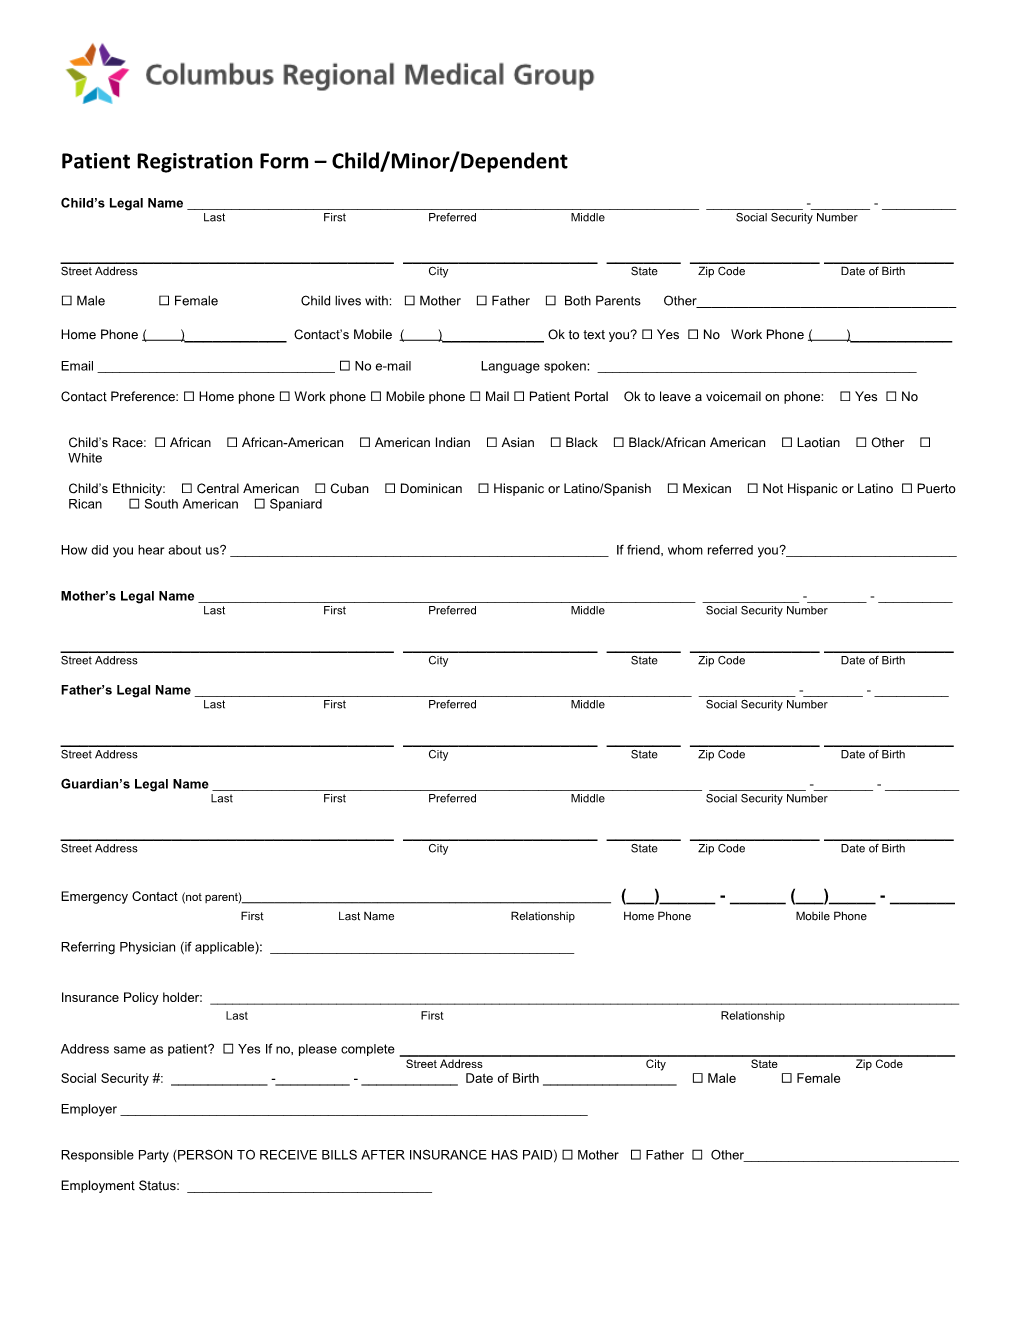 Patient Registration Form Child/Minor/Dependent